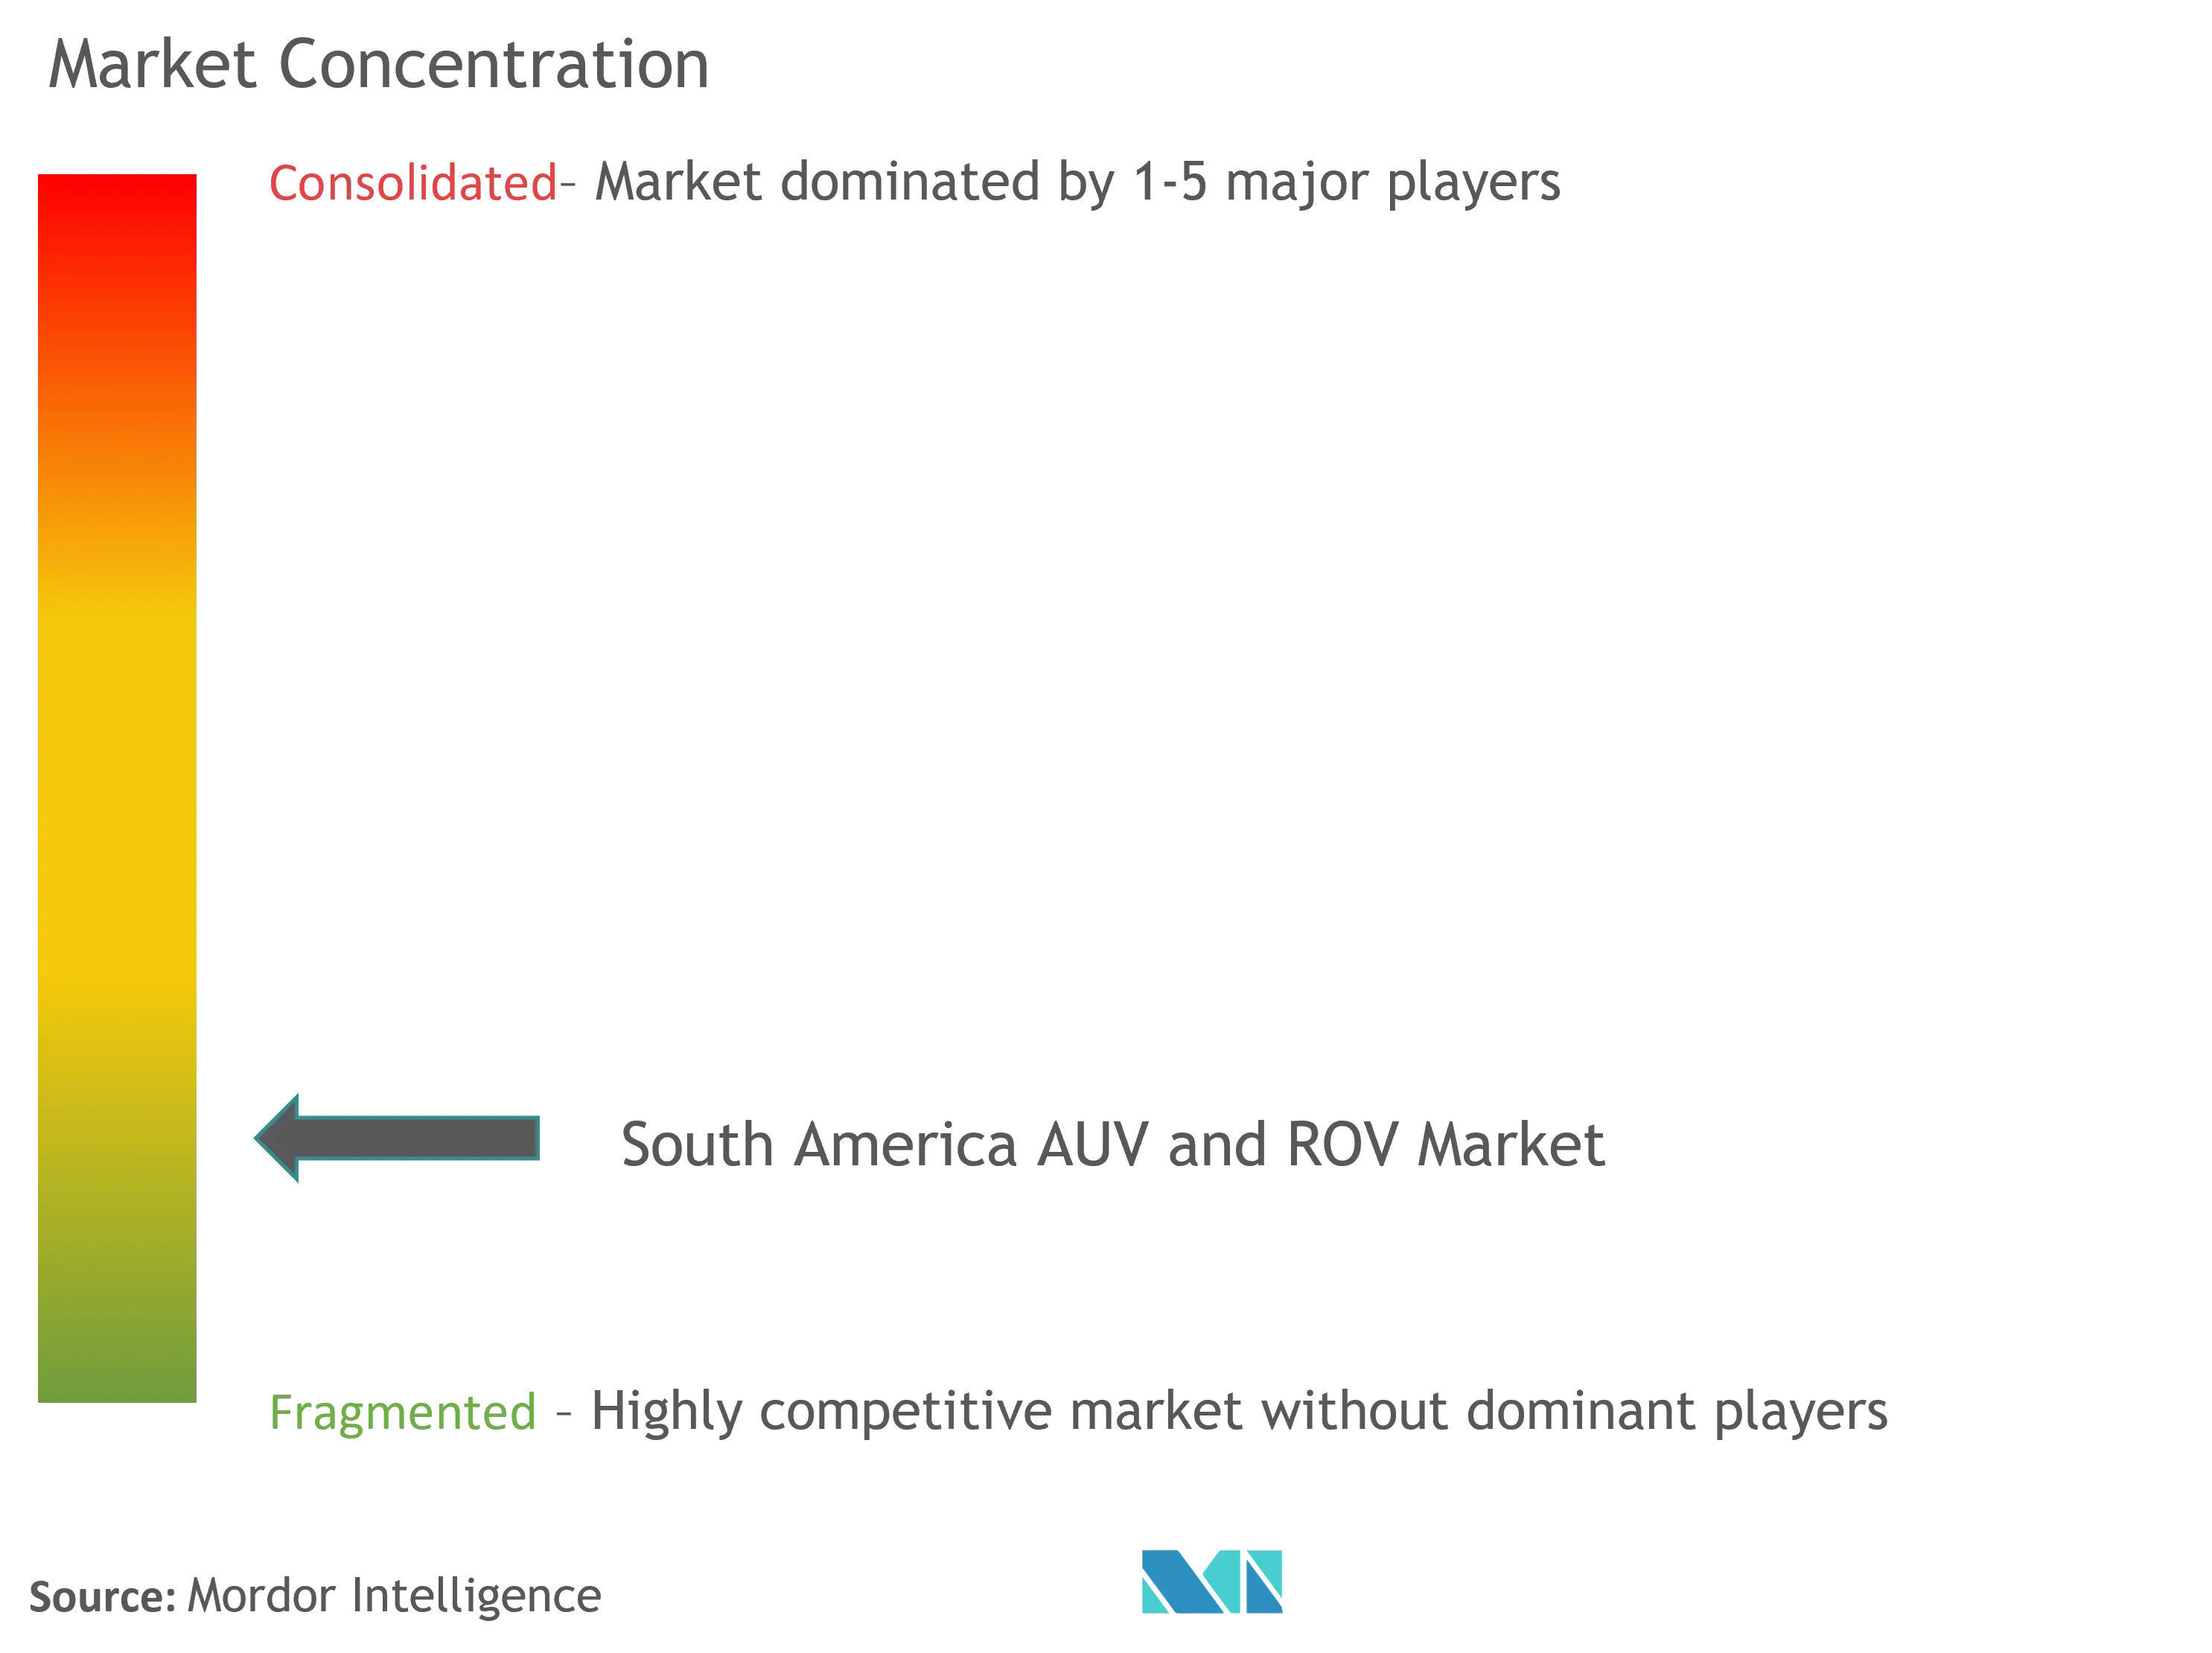 South America AUV & ROV Market Concentration